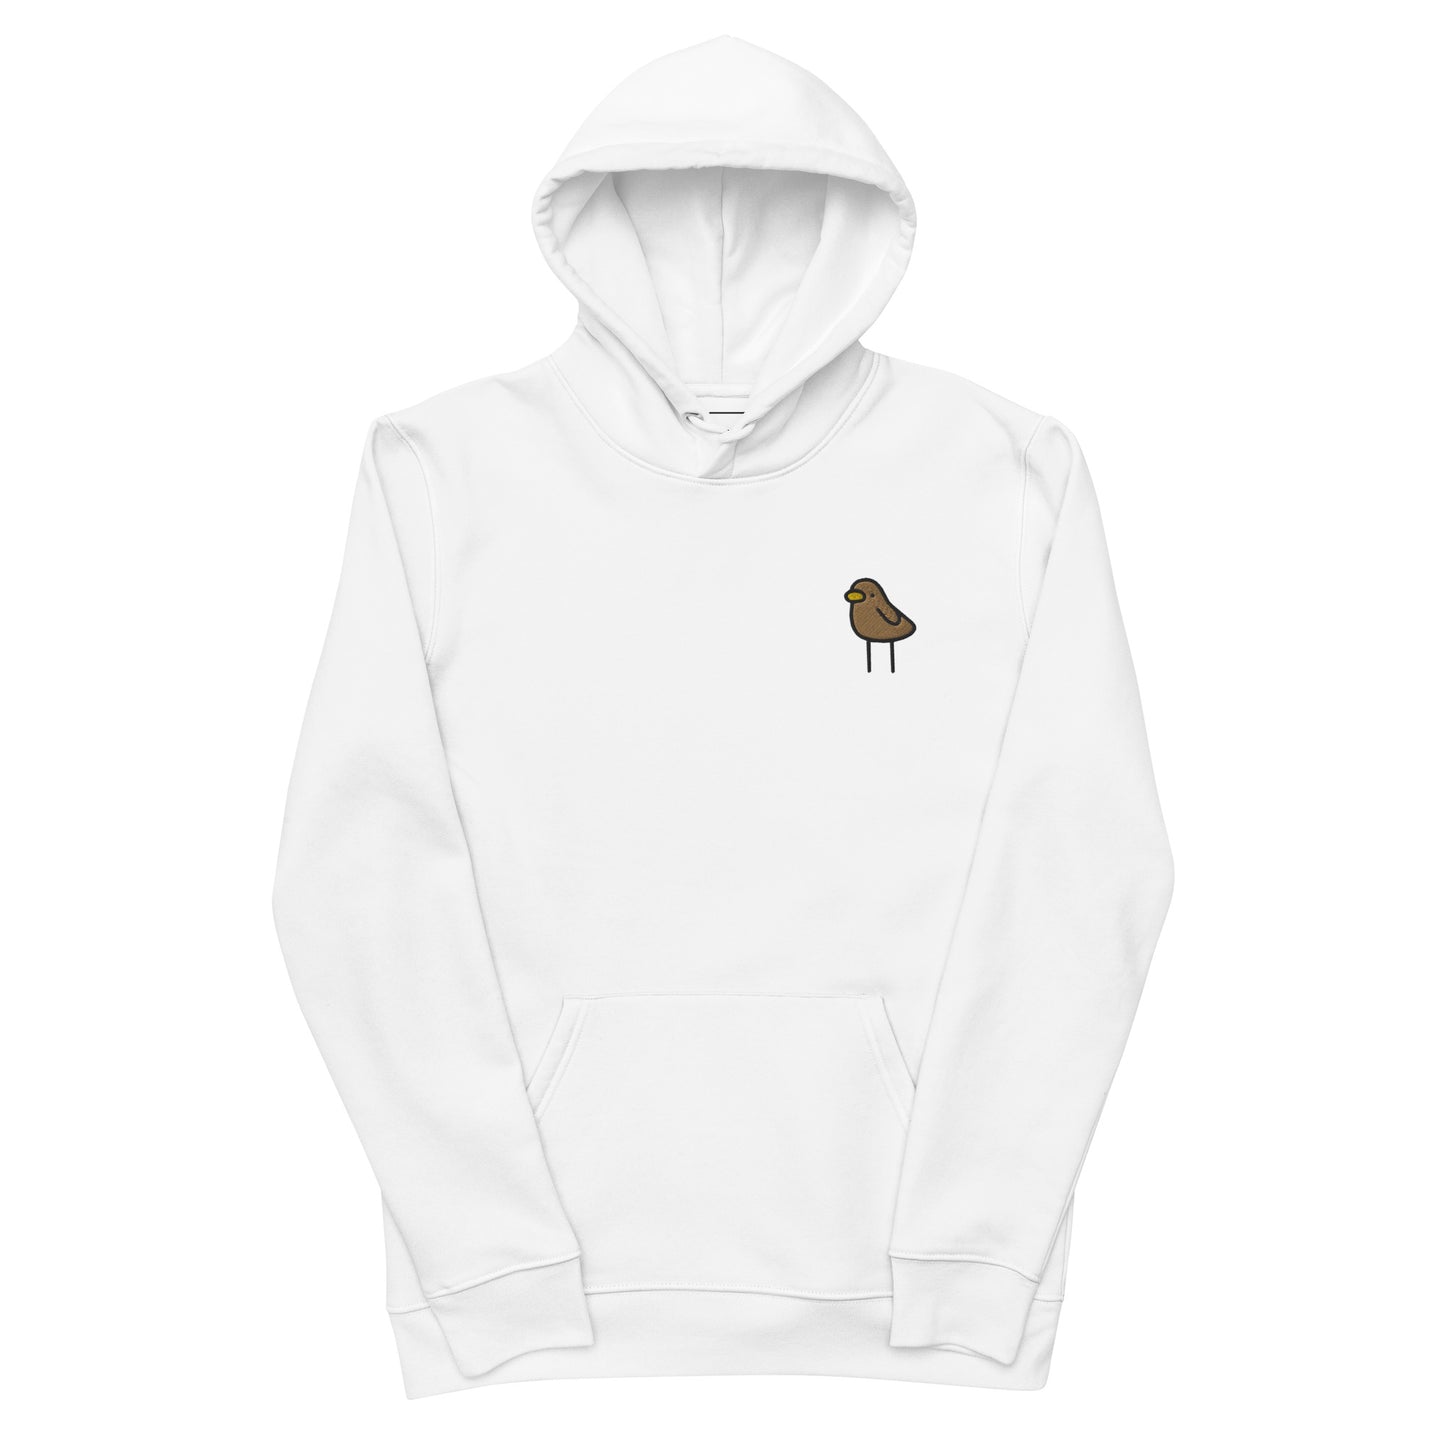 Vengabirb hoodie